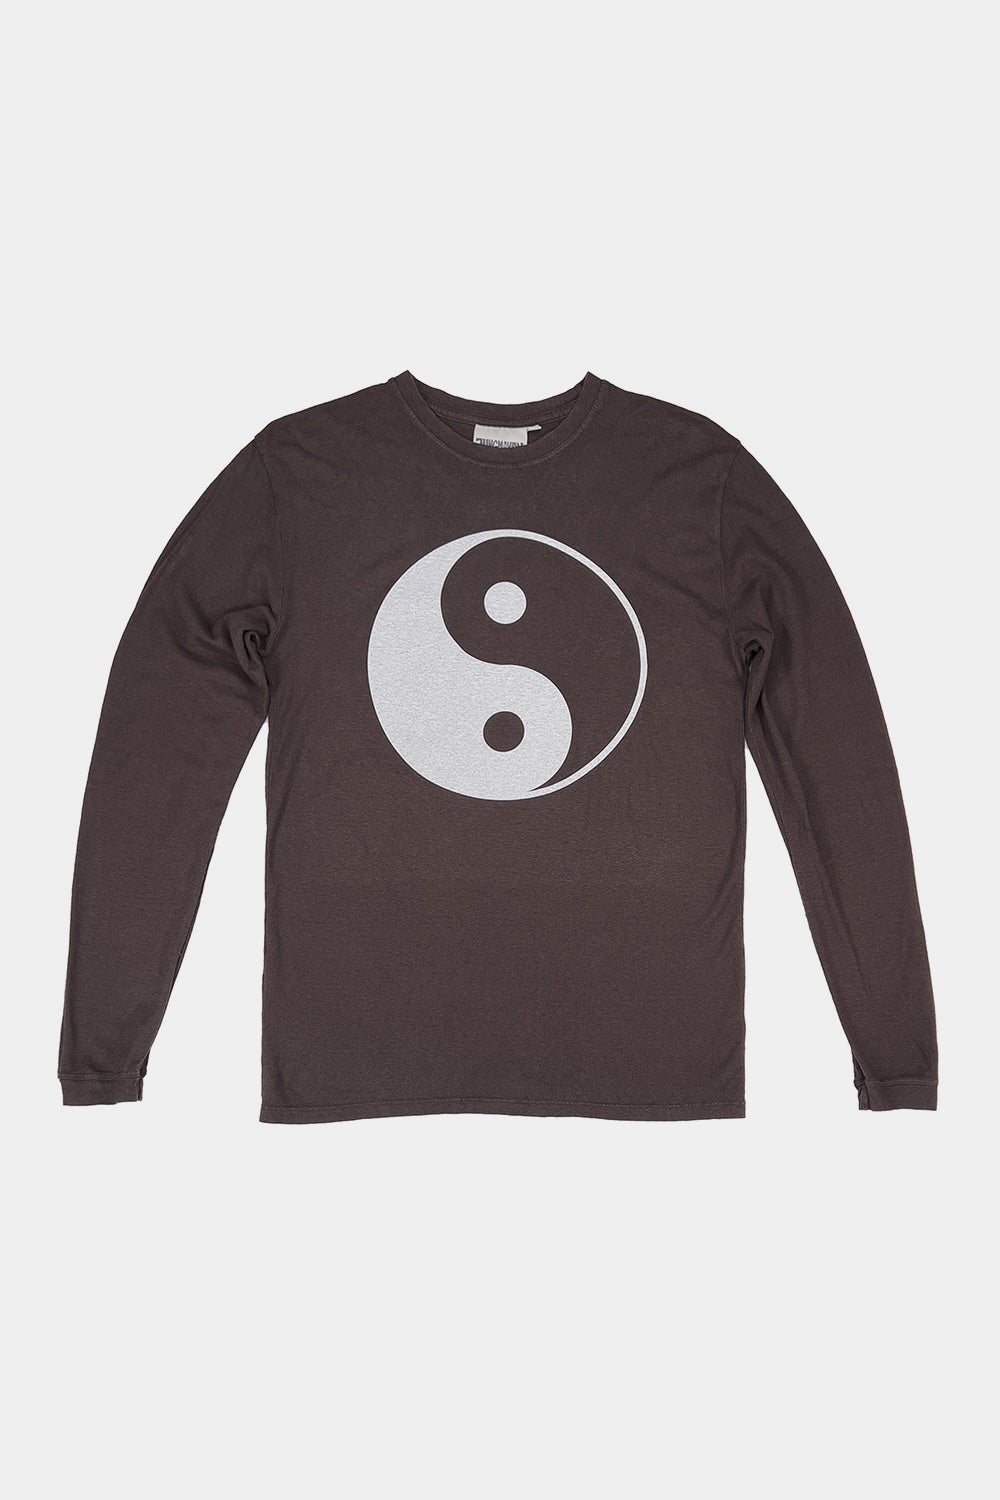 Yin Yang Jung Long Sleeve Tee | Jungmaven Hemp Clothing & Accessories / Color: Coffee Bean